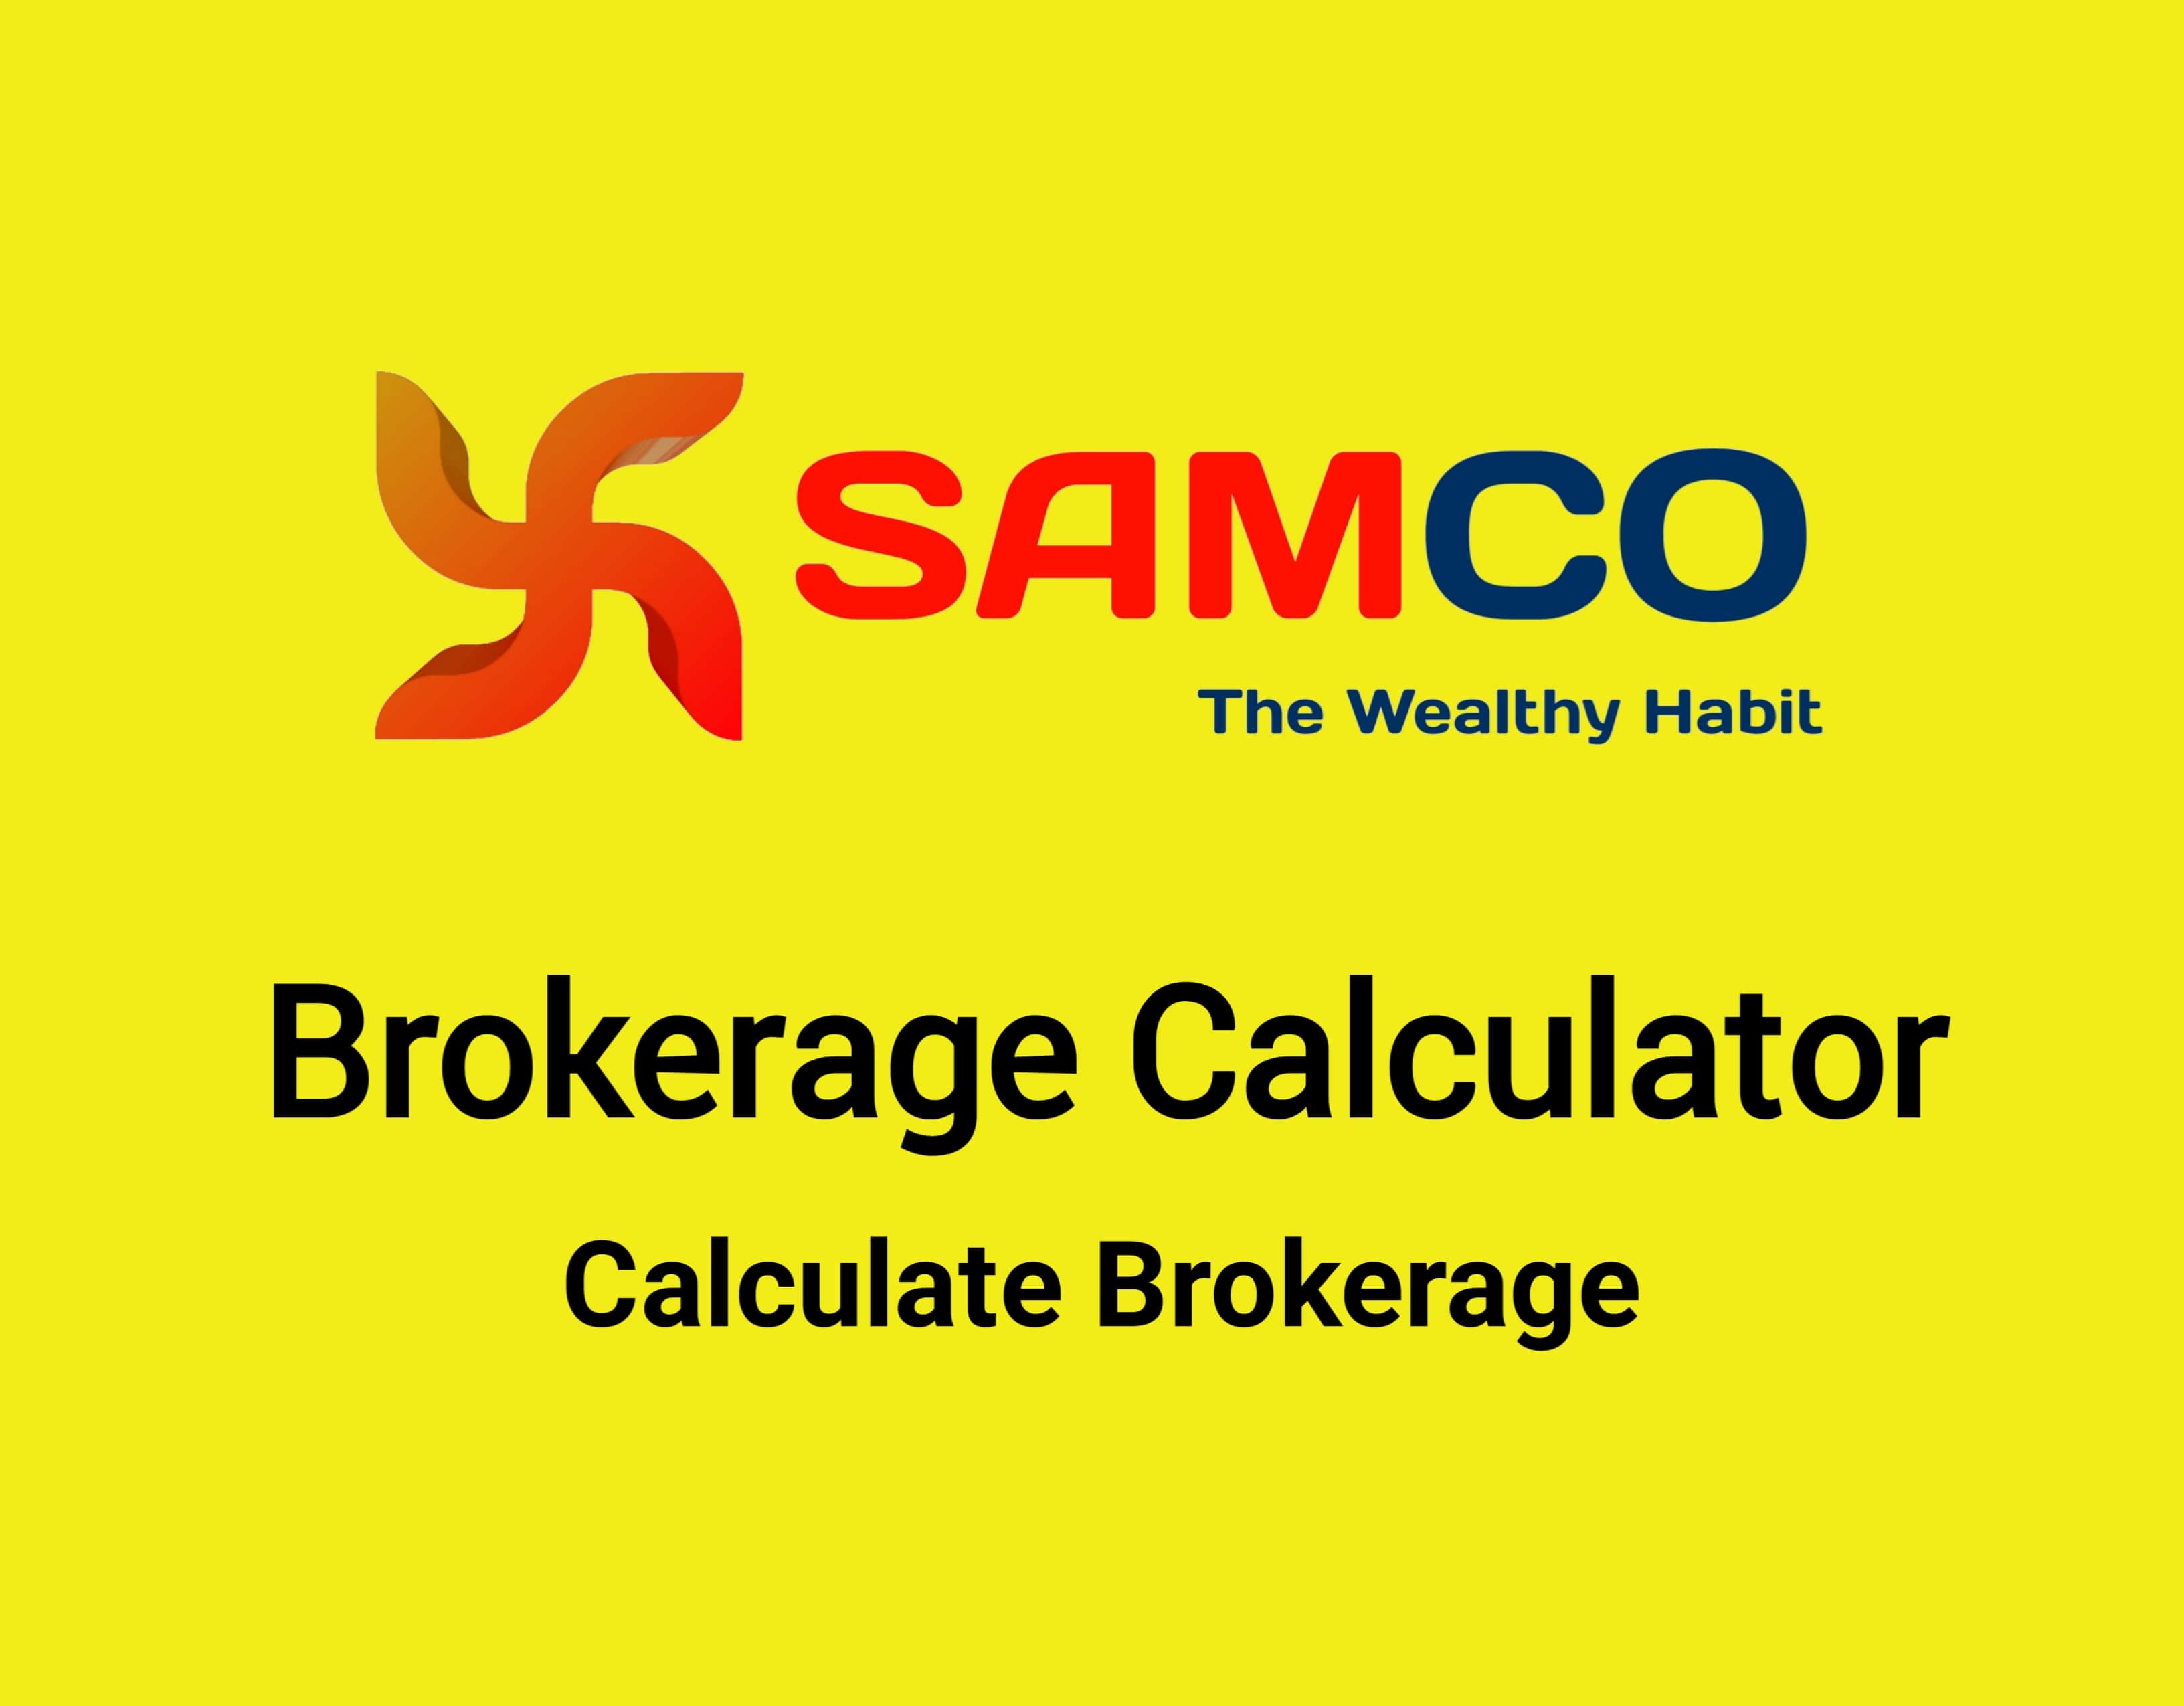 Samco Brokerage Calculator